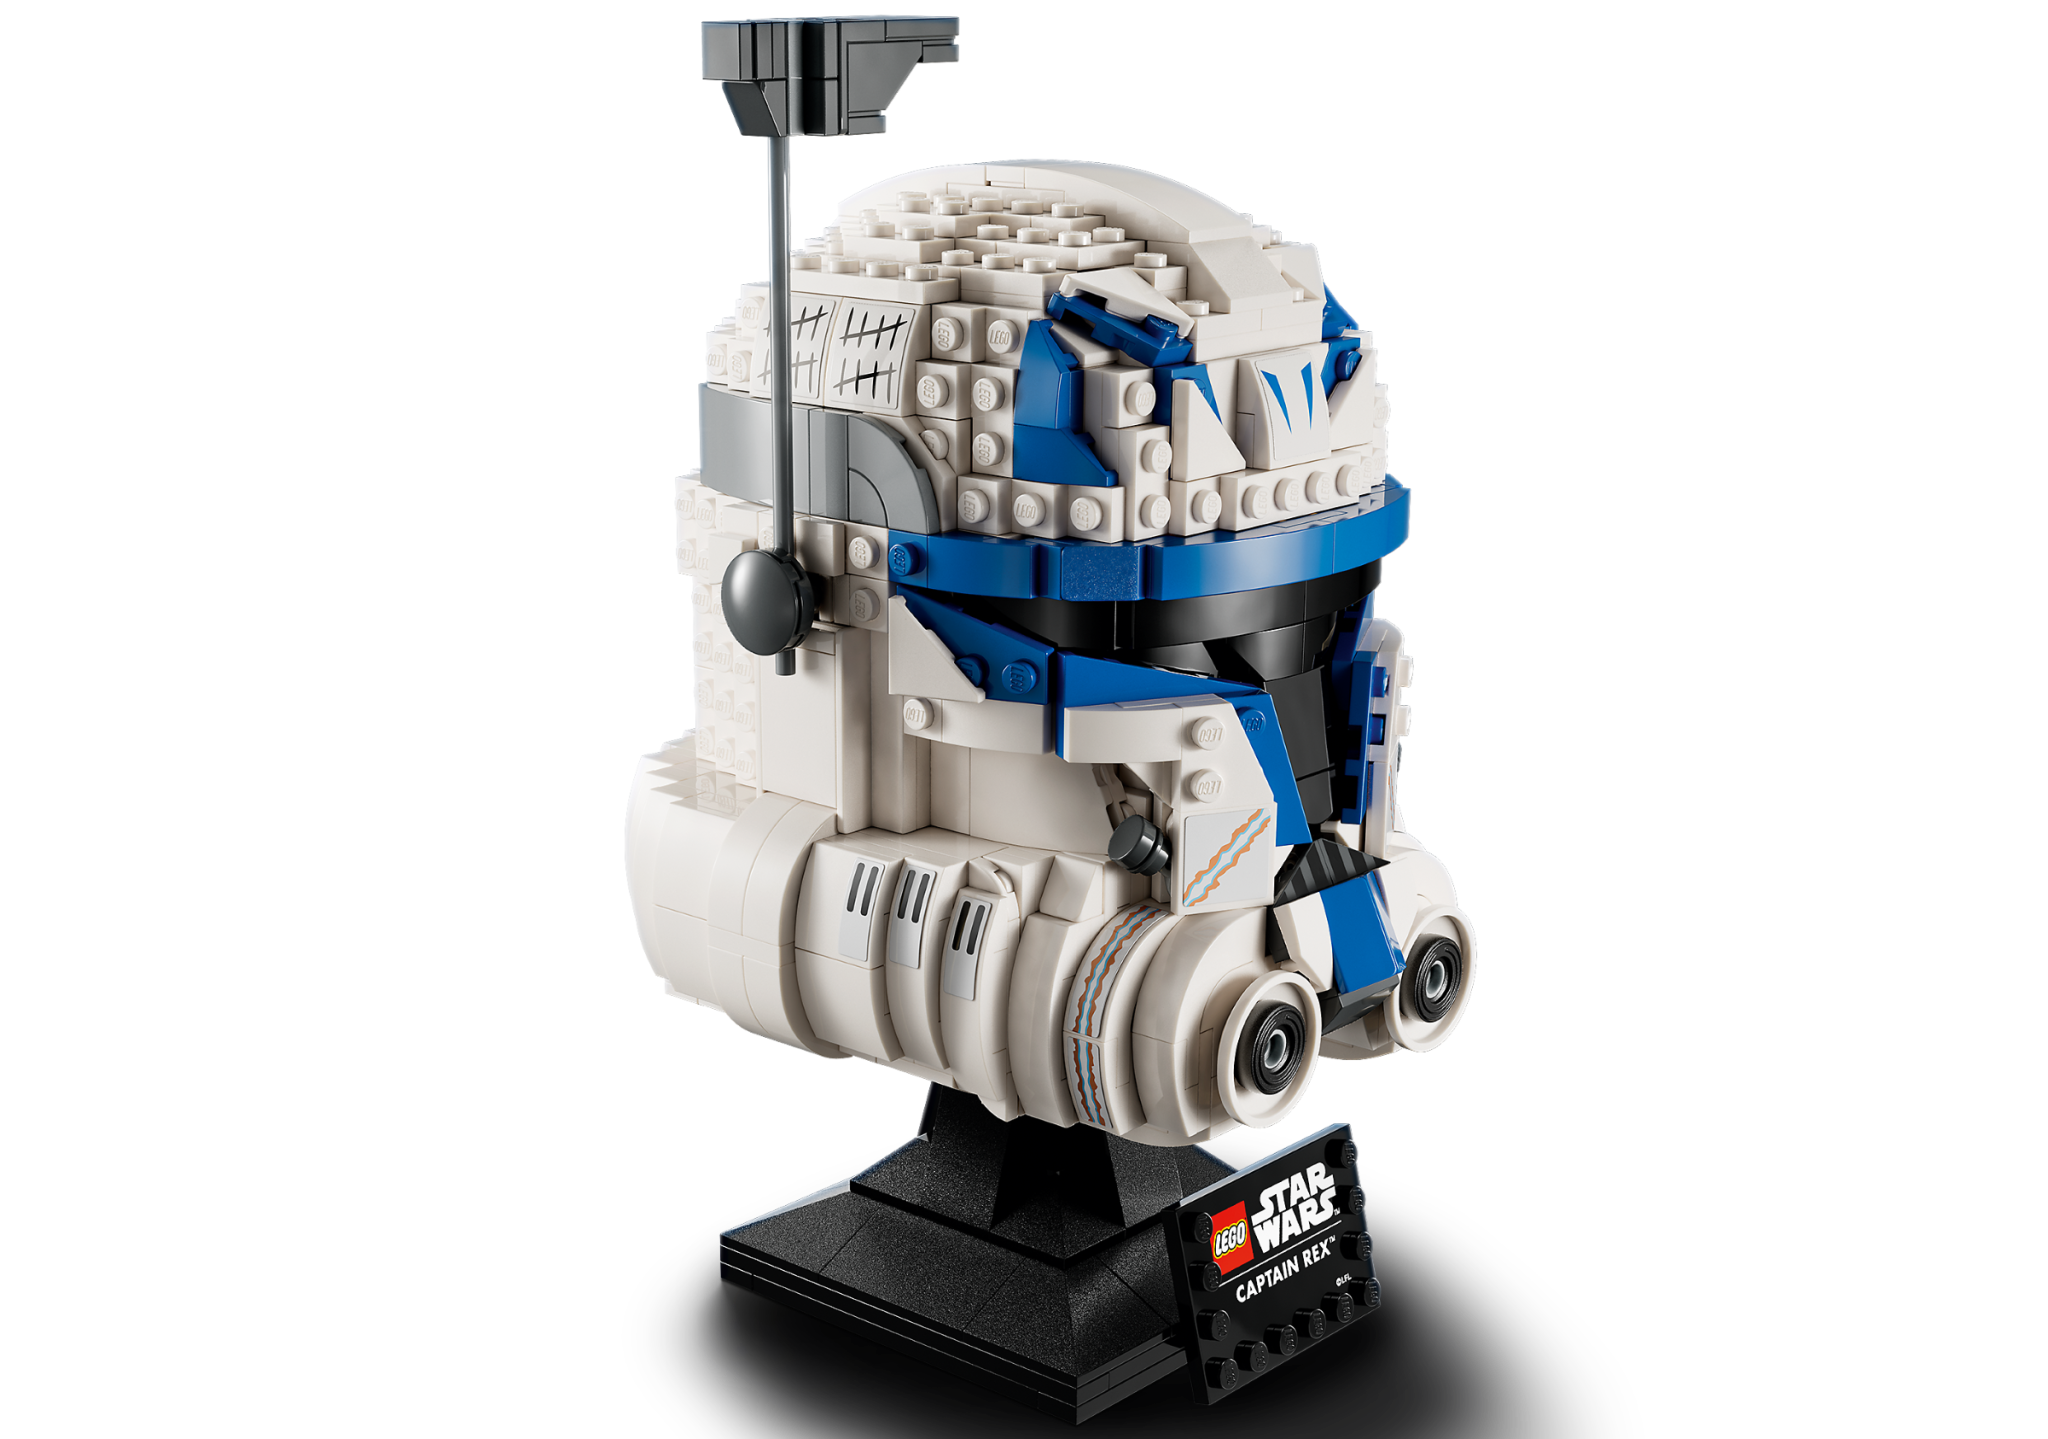 LEGO Star Wars Le Casque du Commandant Clone Cody 75350 LEGO : la